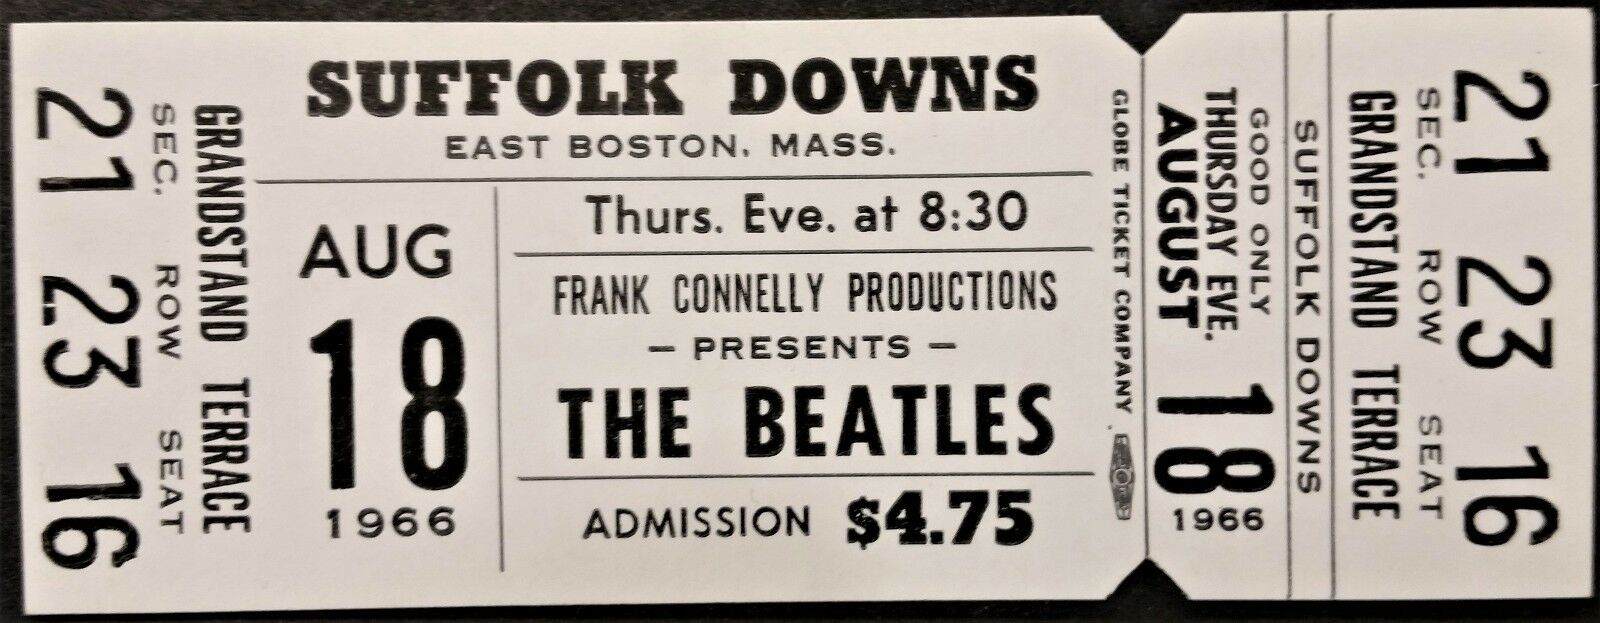 Beatles - 1966 - Full & Unused Original Concert Ticket - Boston - Suffolk Downs